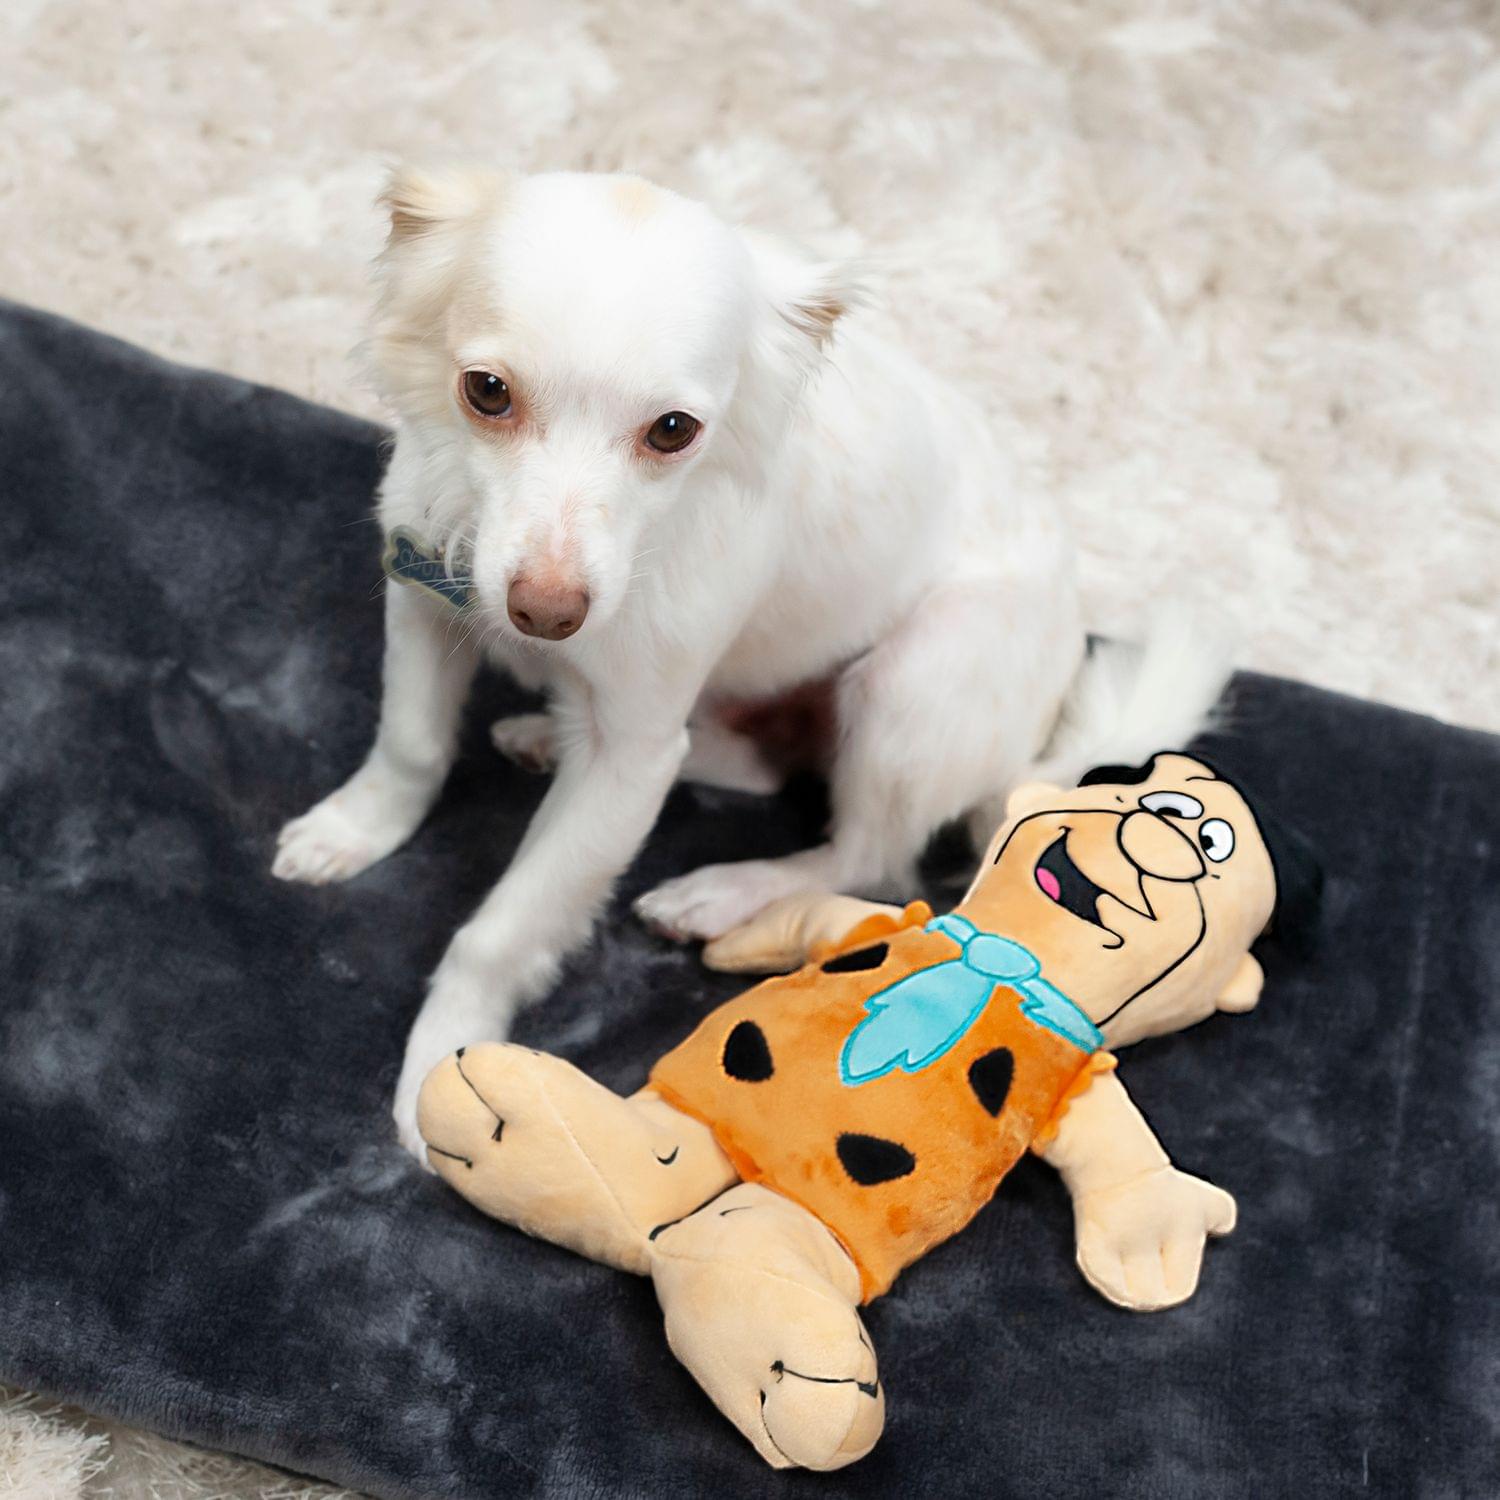 The Flintstones Fred Flintstone 12" Plush Dog Toy